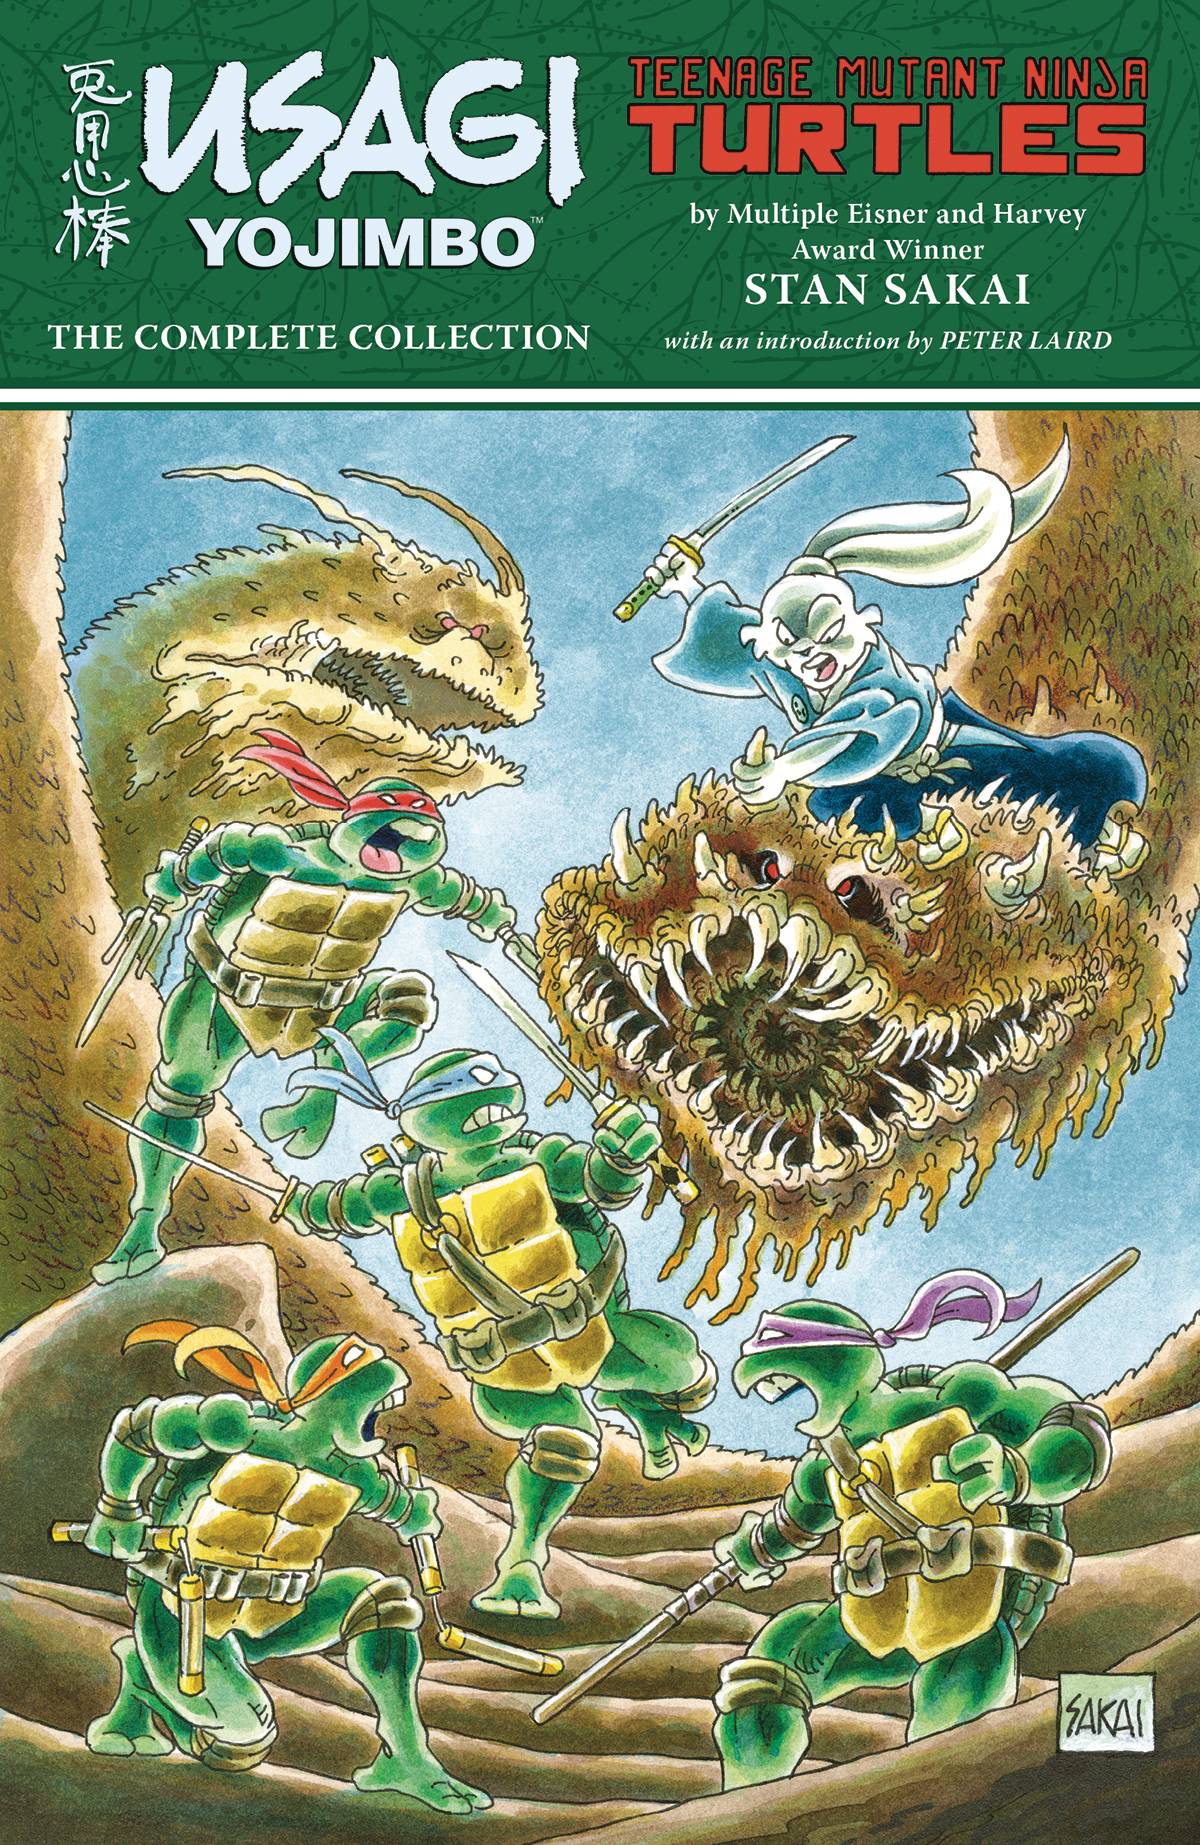 Usagi Yojimbo Teenage Mutant Ninja Turtles Graphic Novel Complete Collection